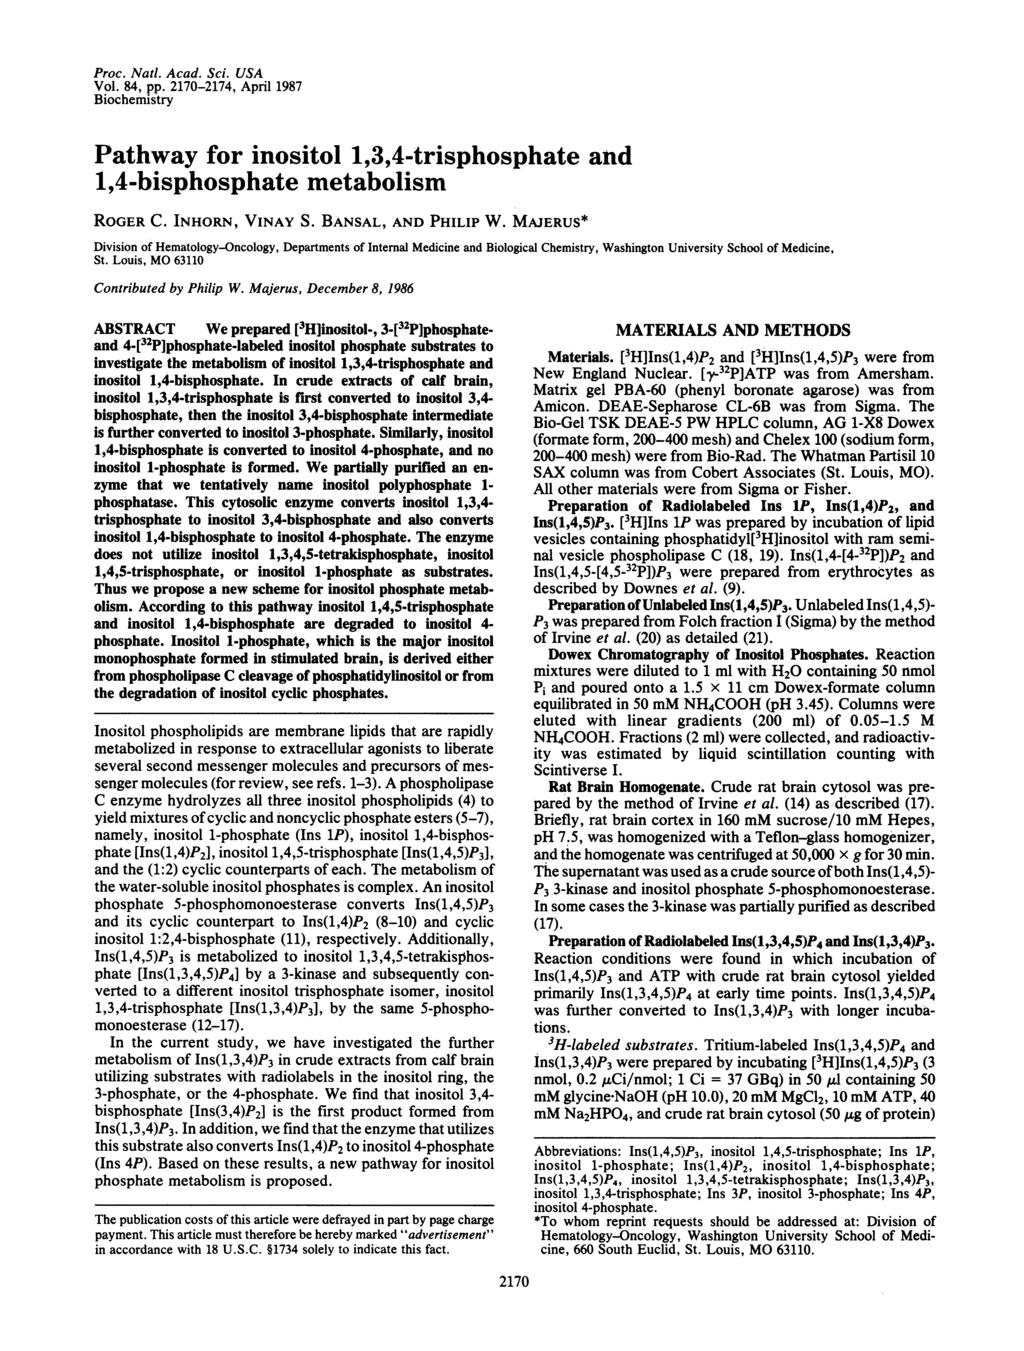 Proc. Natl. Acad. Sci. USA Vol. 84, pp. 217-2174, April 1987 Biochemistry Pathway for inositol 1,3,4-trisphosphate and 1,4-bisphosphate metabolism ROGR C. INHORN, VINAY S. BANSAL, AND PHILIP W.